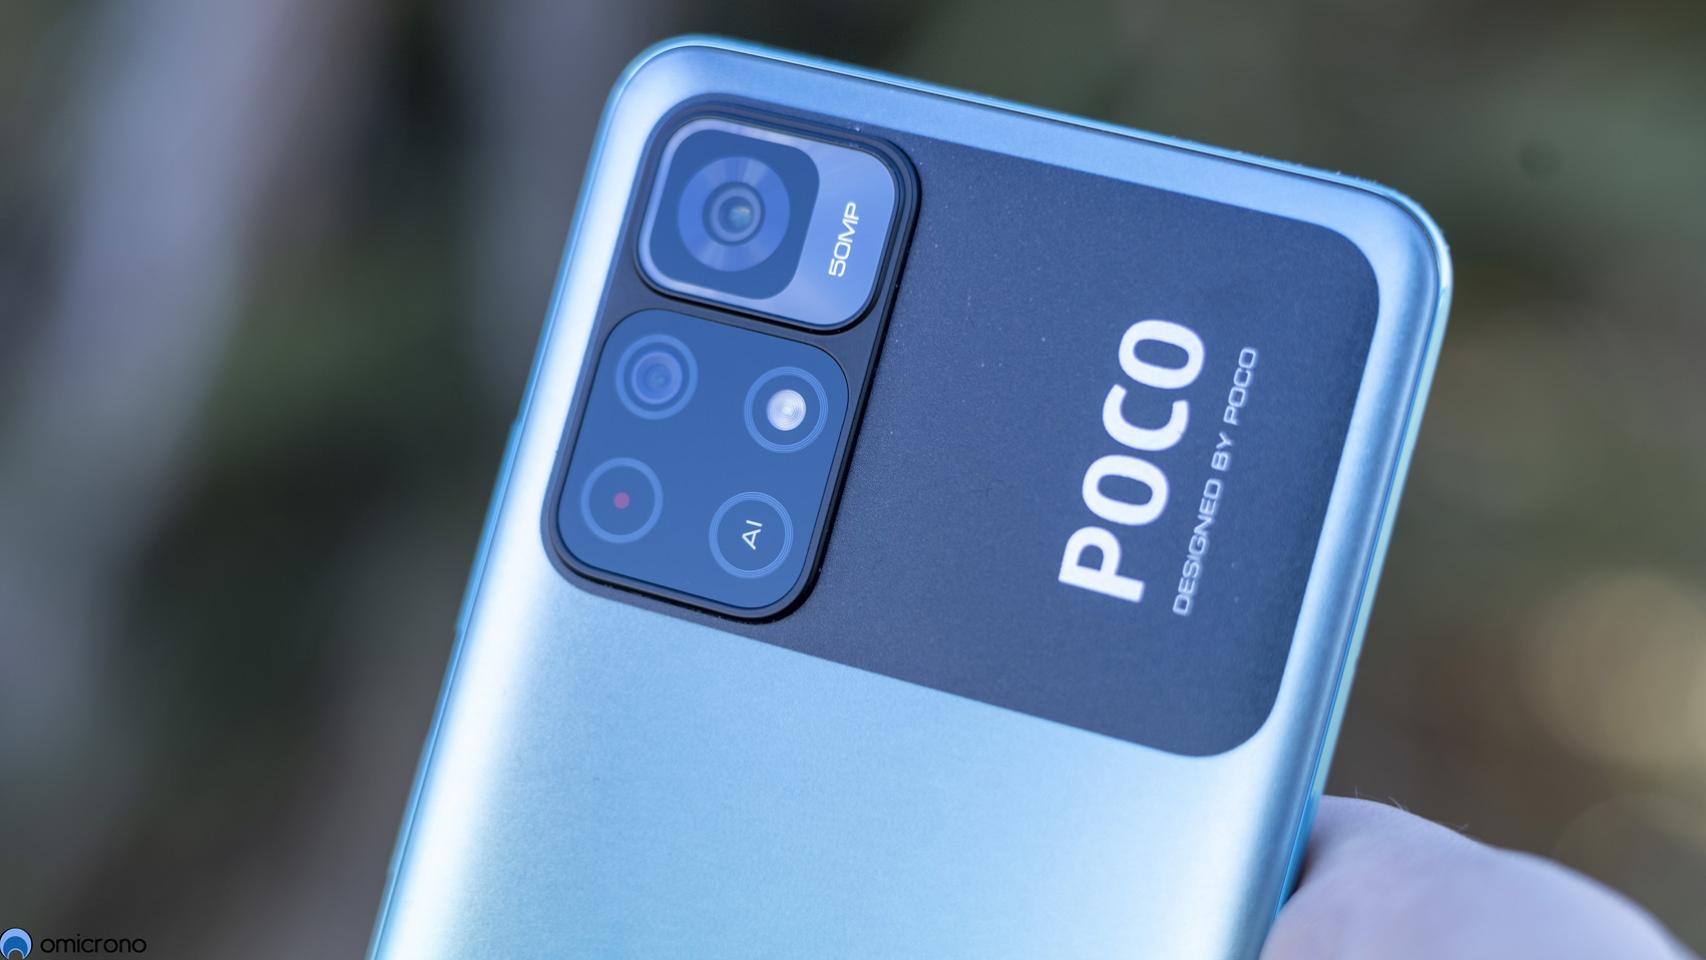 POCO M4 Pro 5G: un impresionante móvil 5G por menos de 250 euros